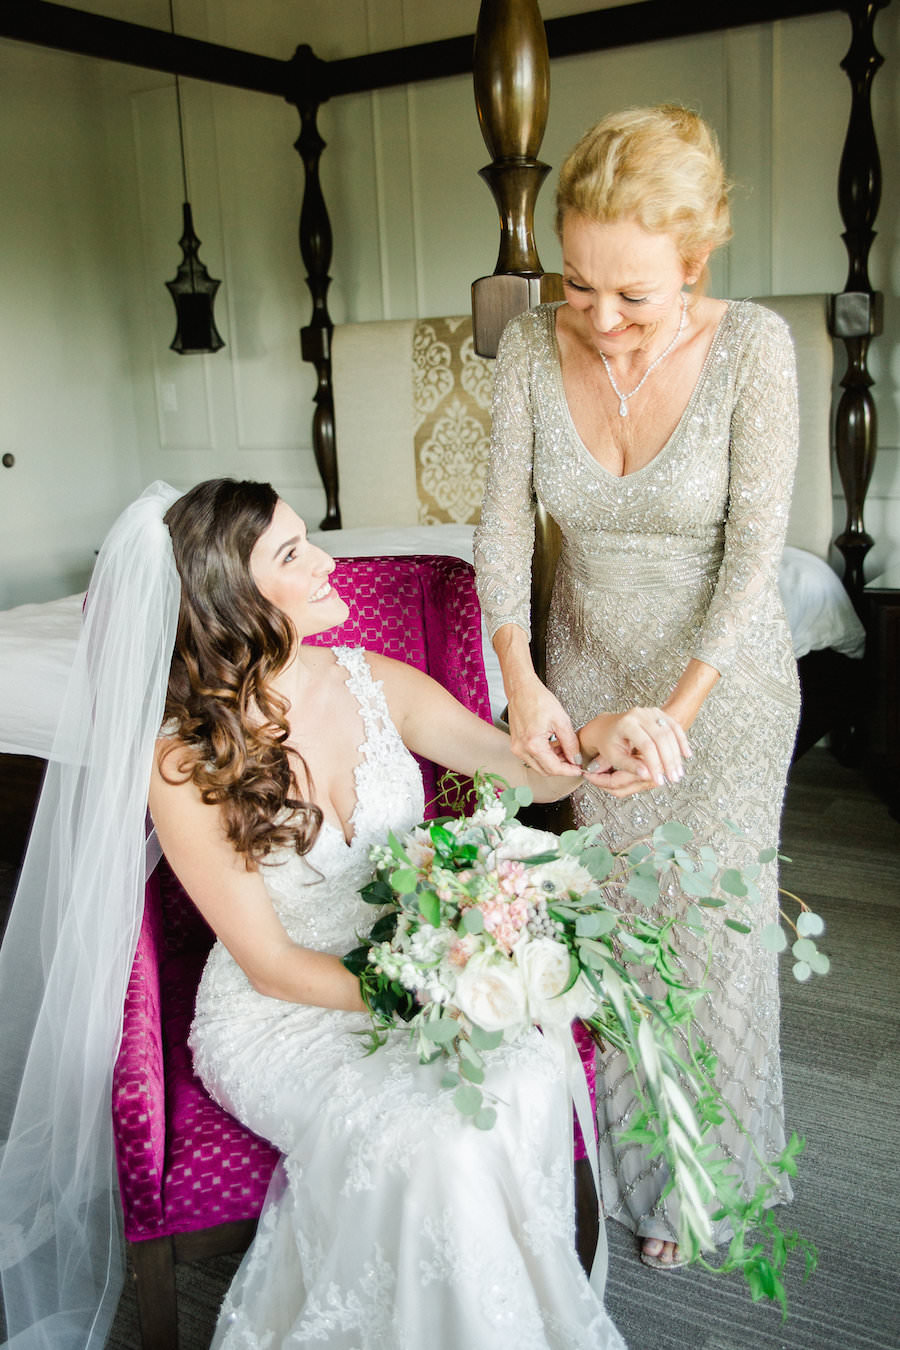 Bride Getting Ready on Wedding Day | Mom Helping Bride Put on Bracelet | St. Petersburg Wedding Venue The Birchwood | Tampa Bay Wedding Photographer Ailyn La Torre Photography